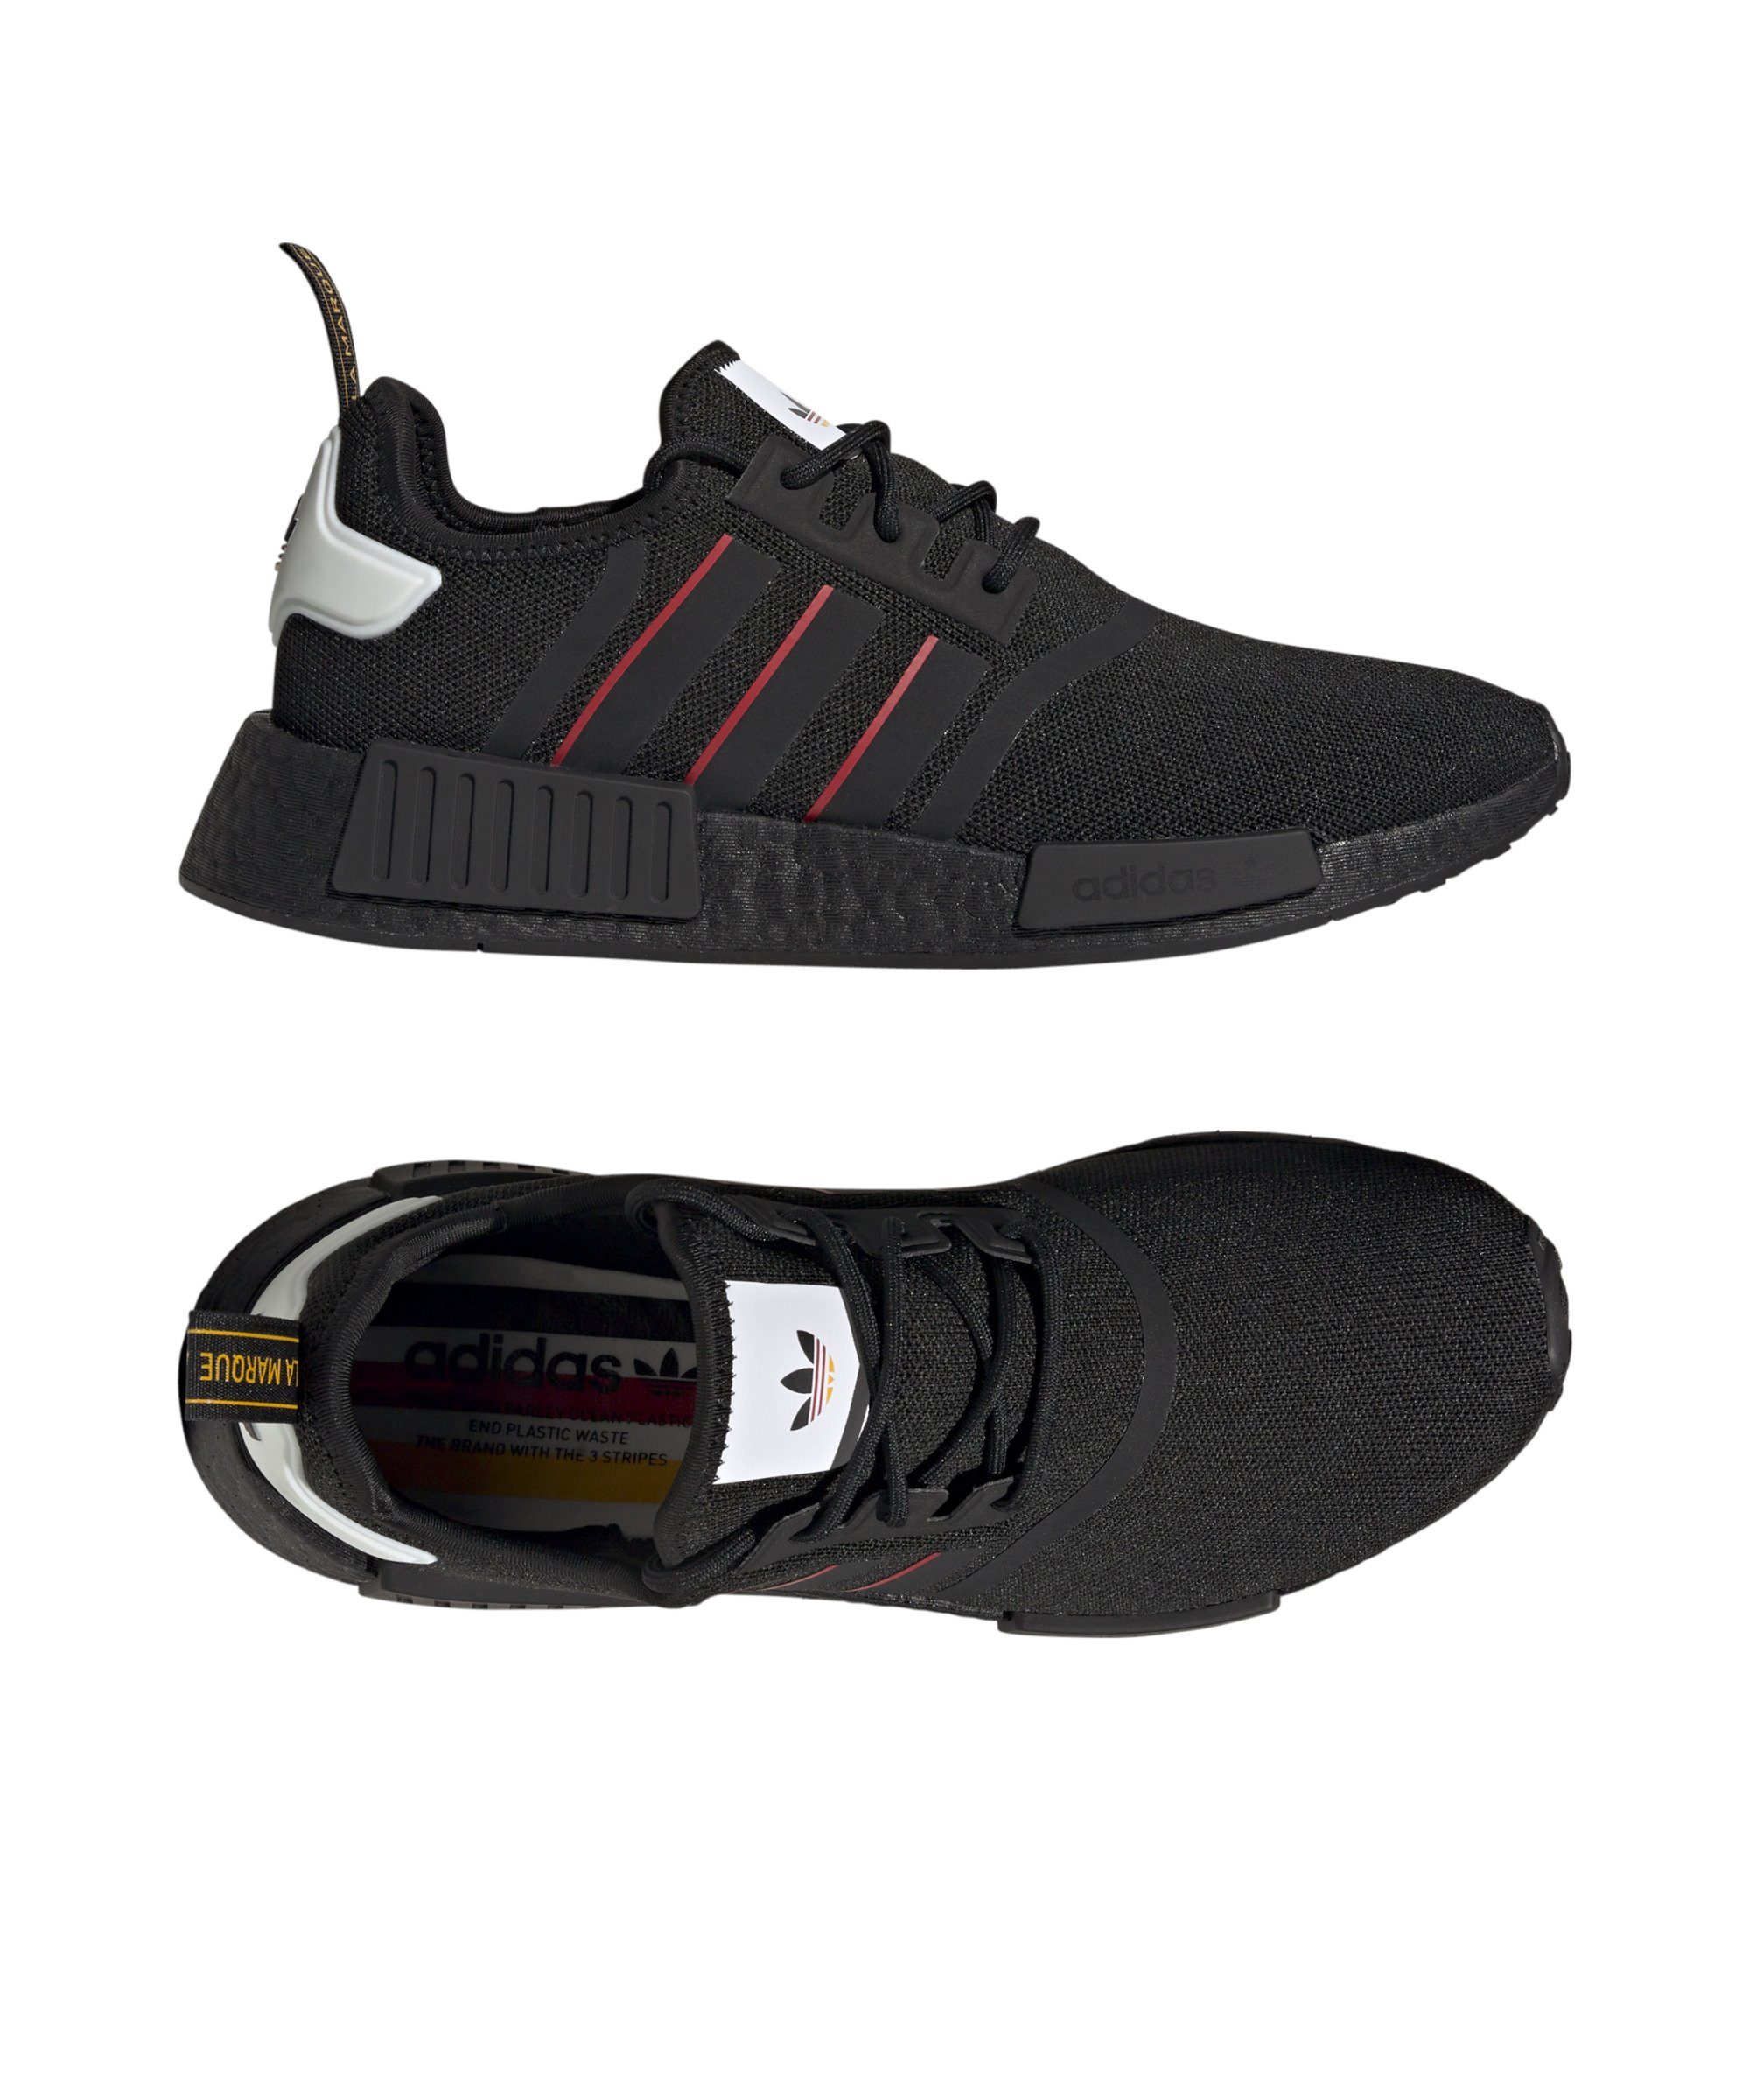 schwarzrotweiss NMD adidas Originals R1 Sneaker